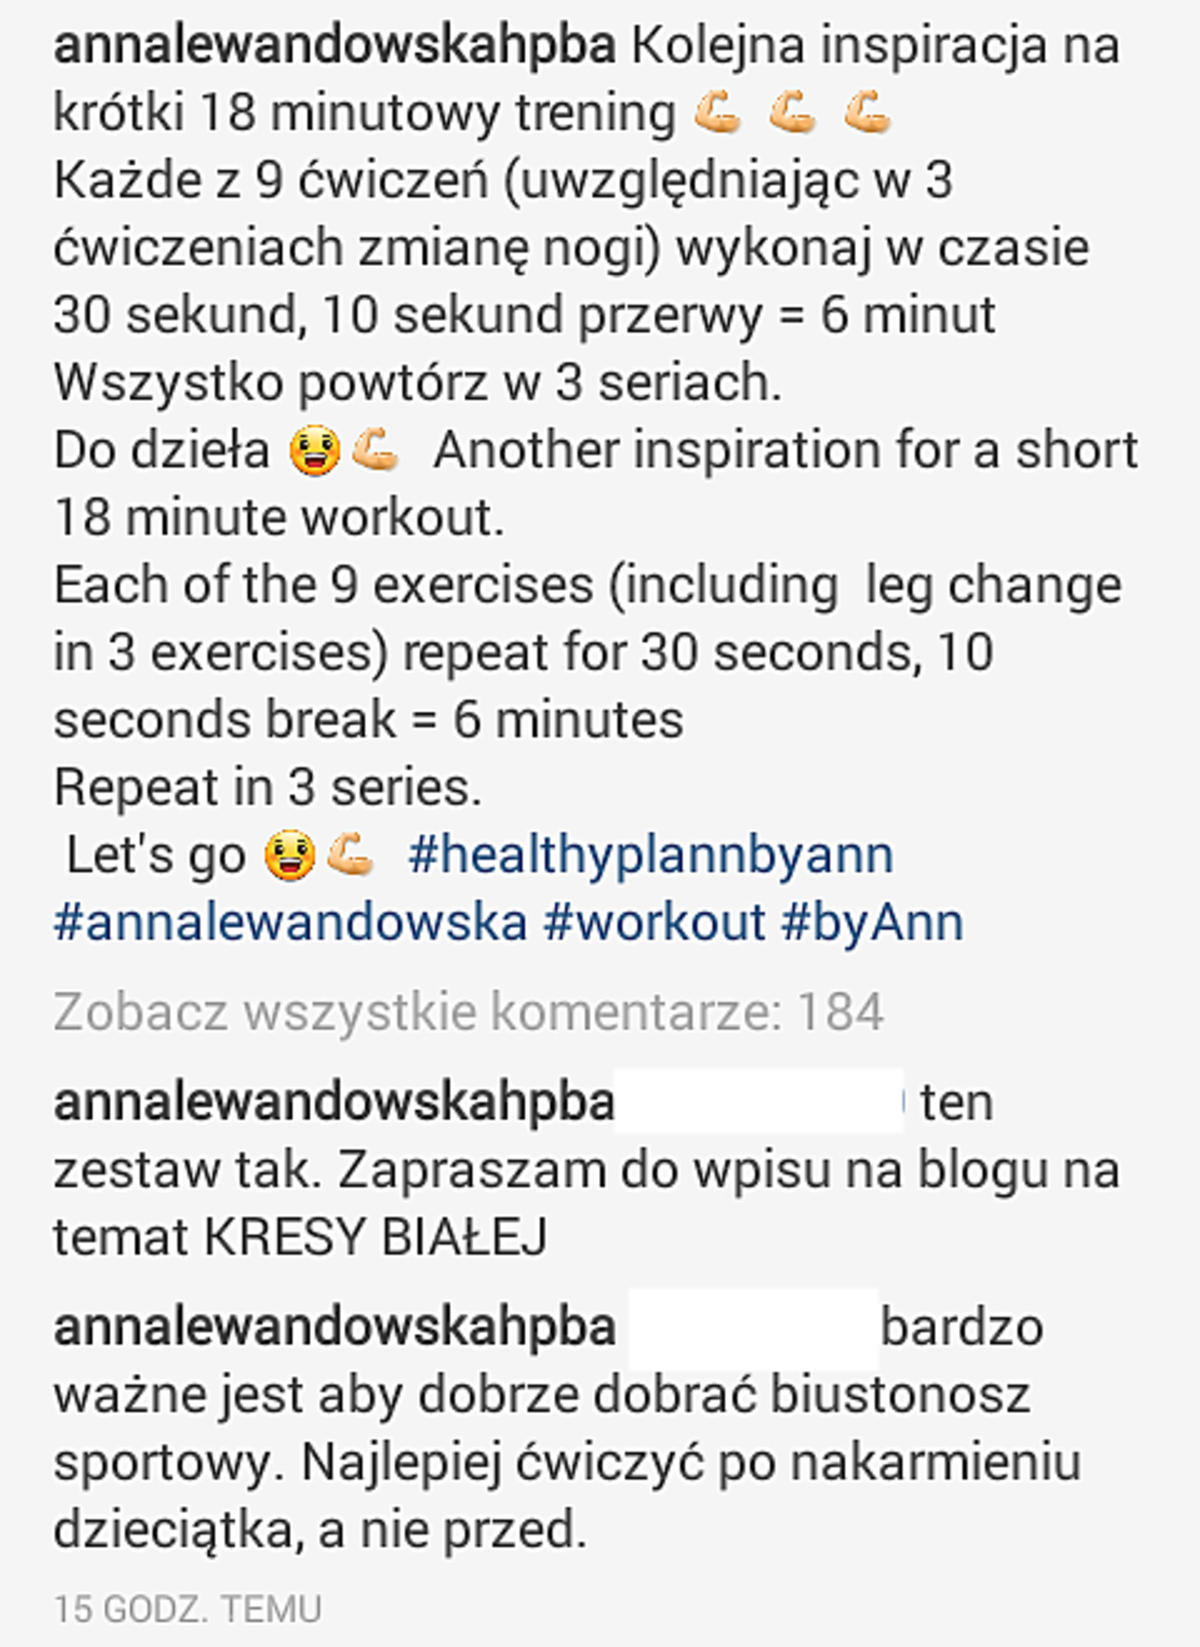 Instagram/Anna Lewandowska